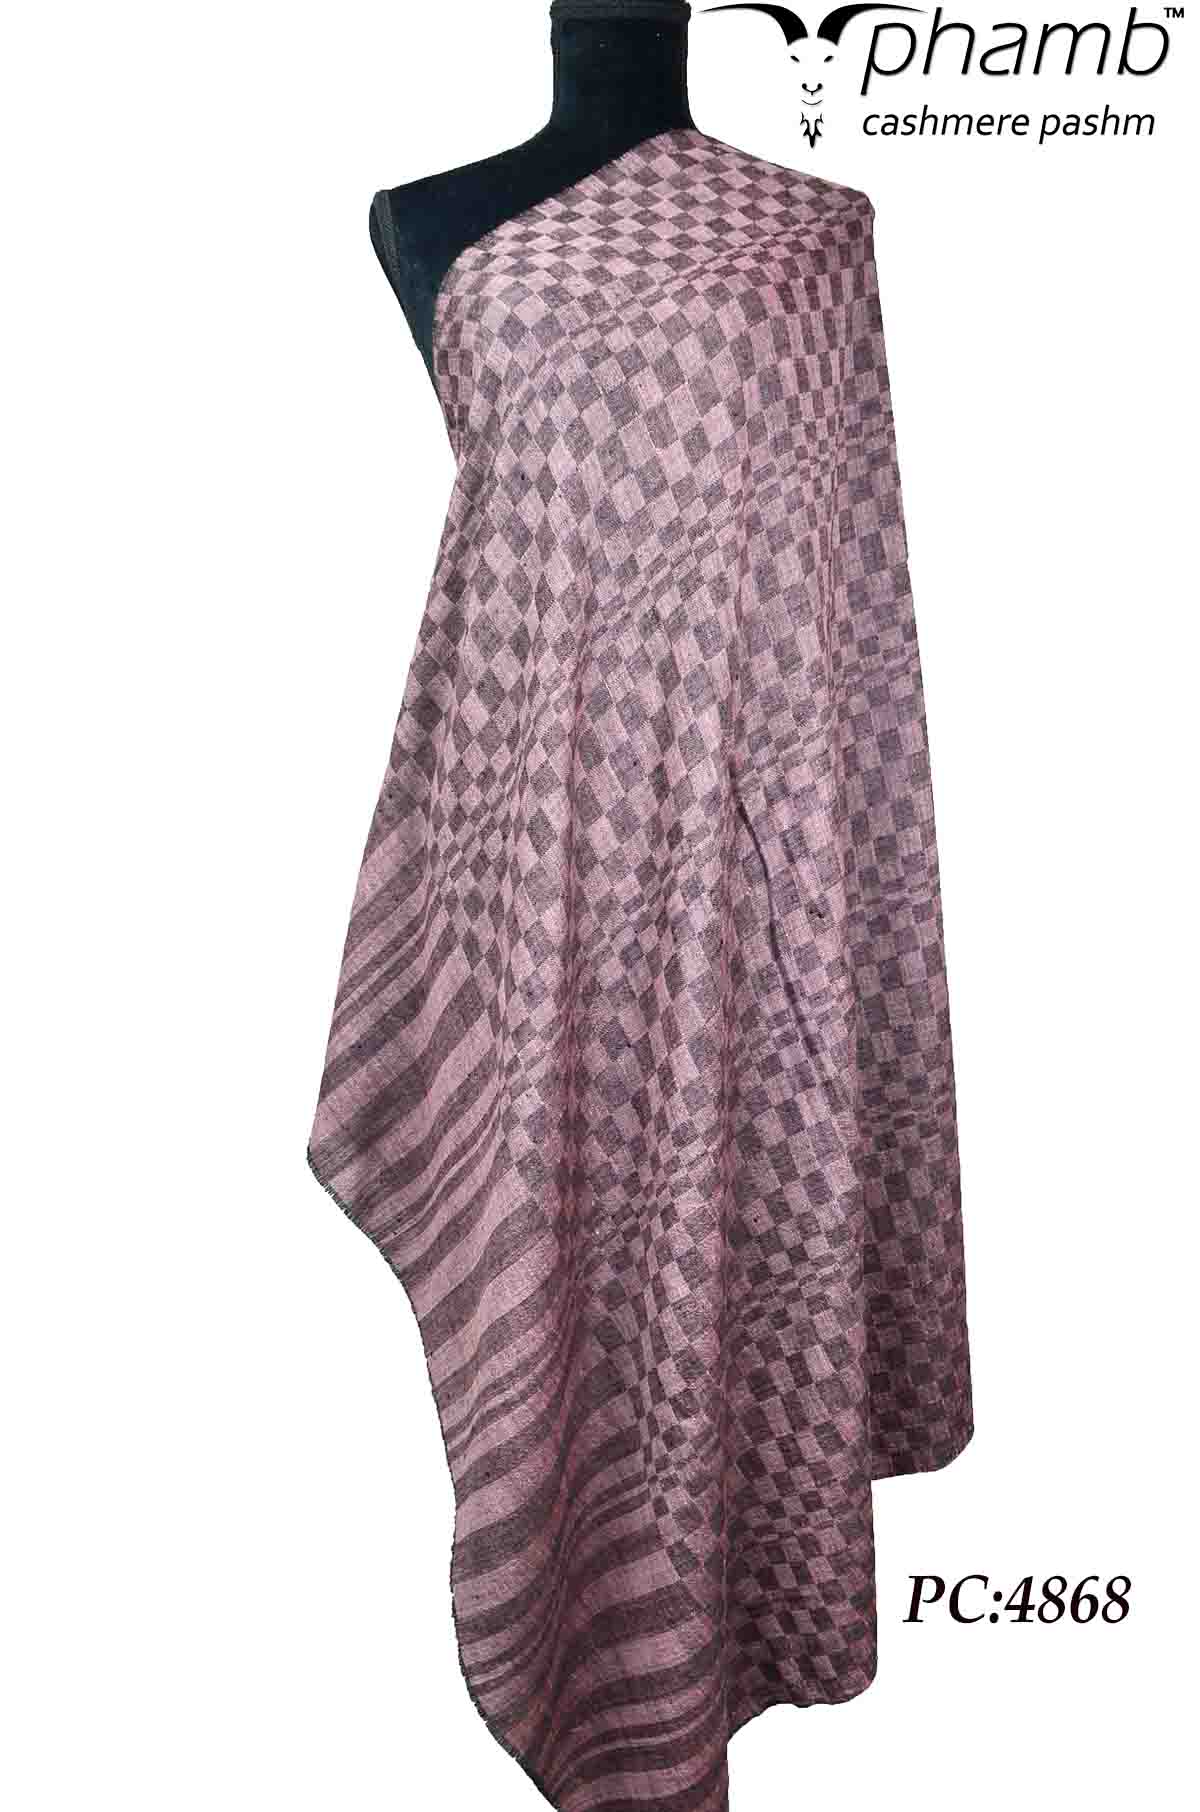 pattern design shawl - 4868